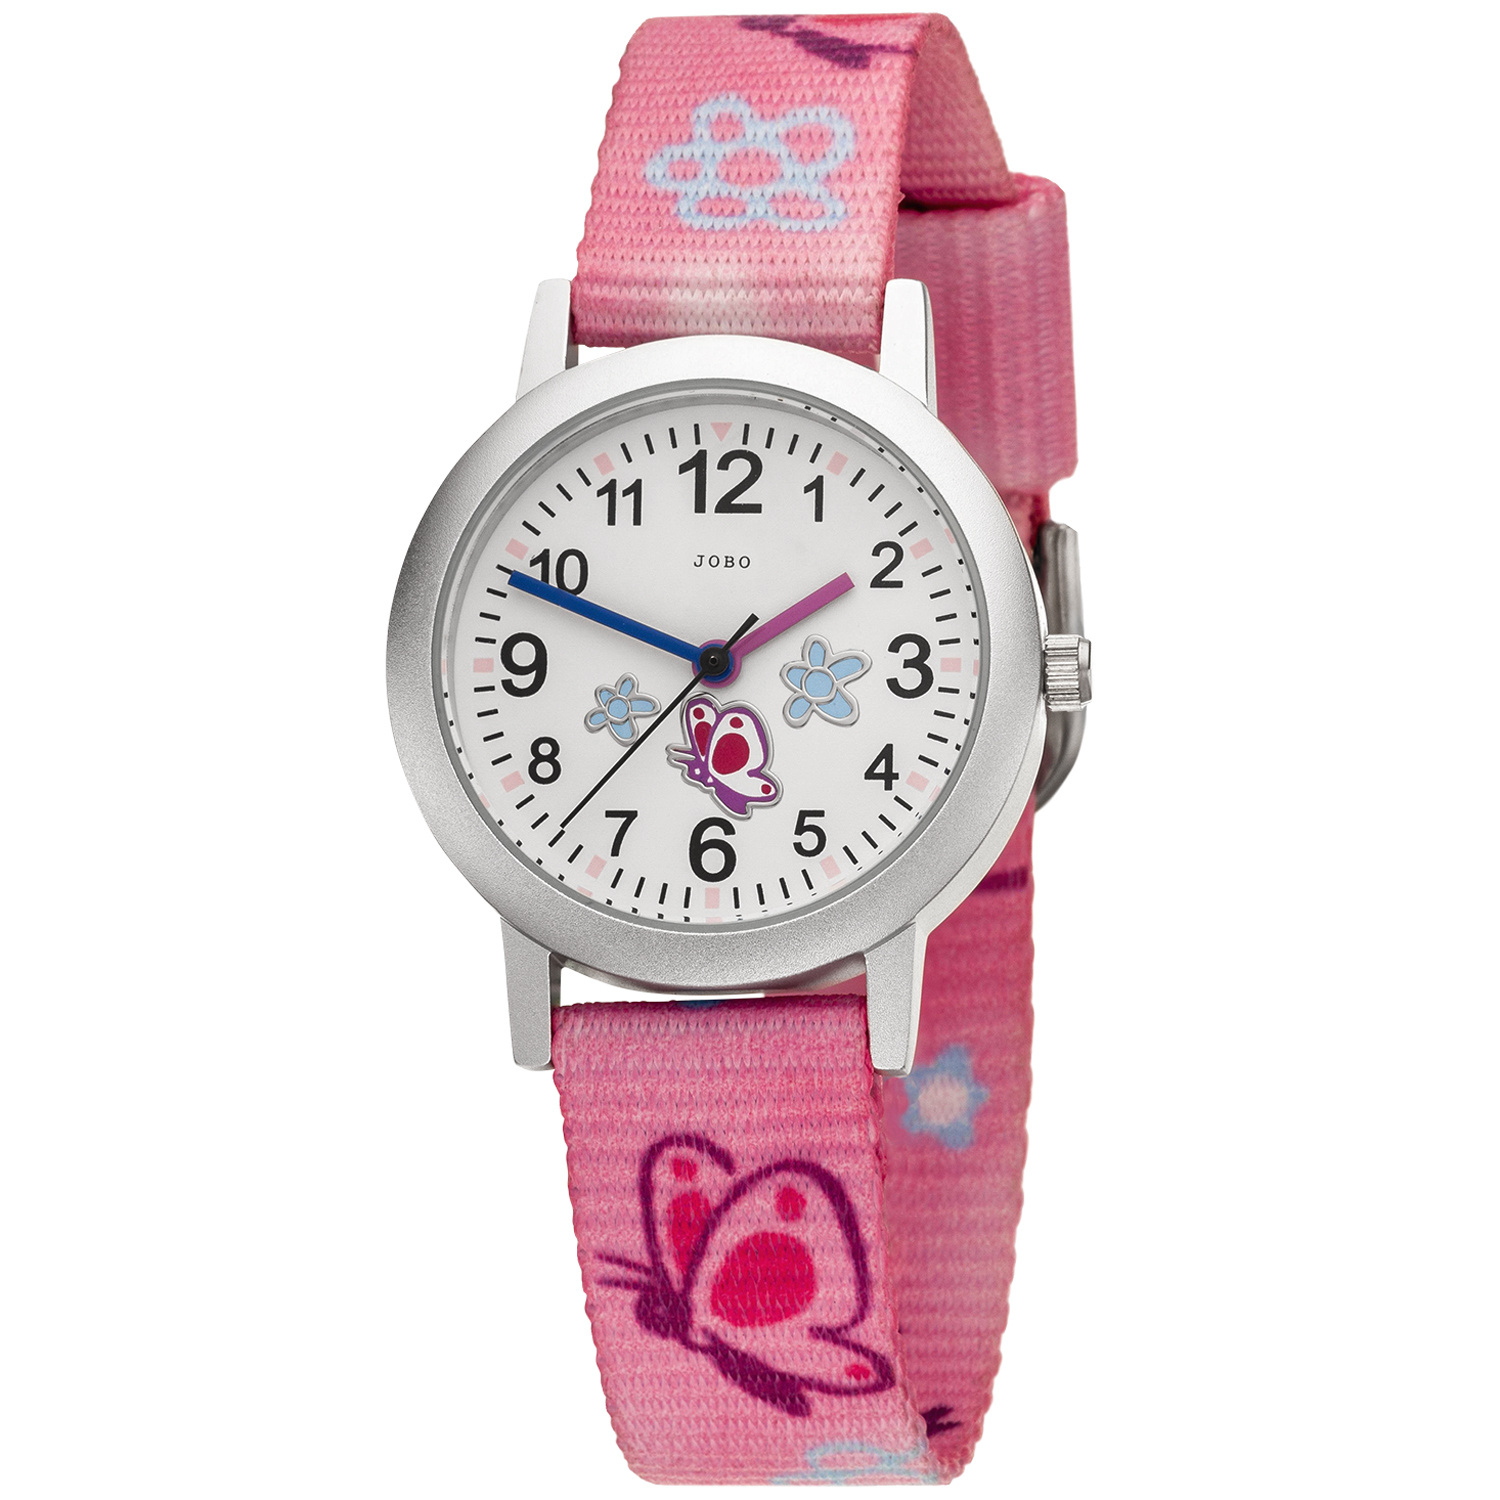 Aluminium Analog Kinderuhr Armbanduhr pink Kinder JOBO Quarz rosa Schmetterling